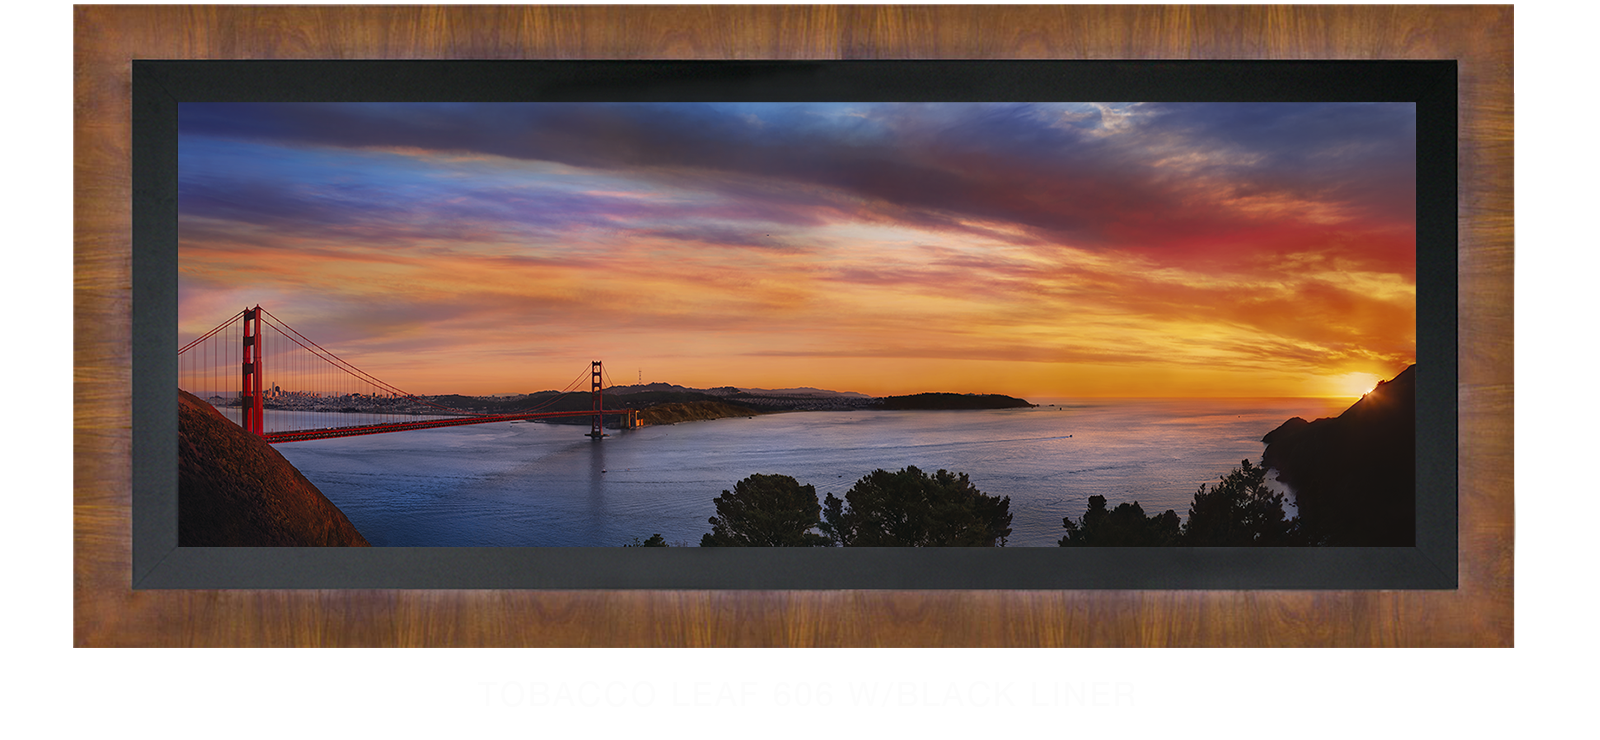 23GoldenGateBridge Tobacco Leaf 606 w_Blk Liner T